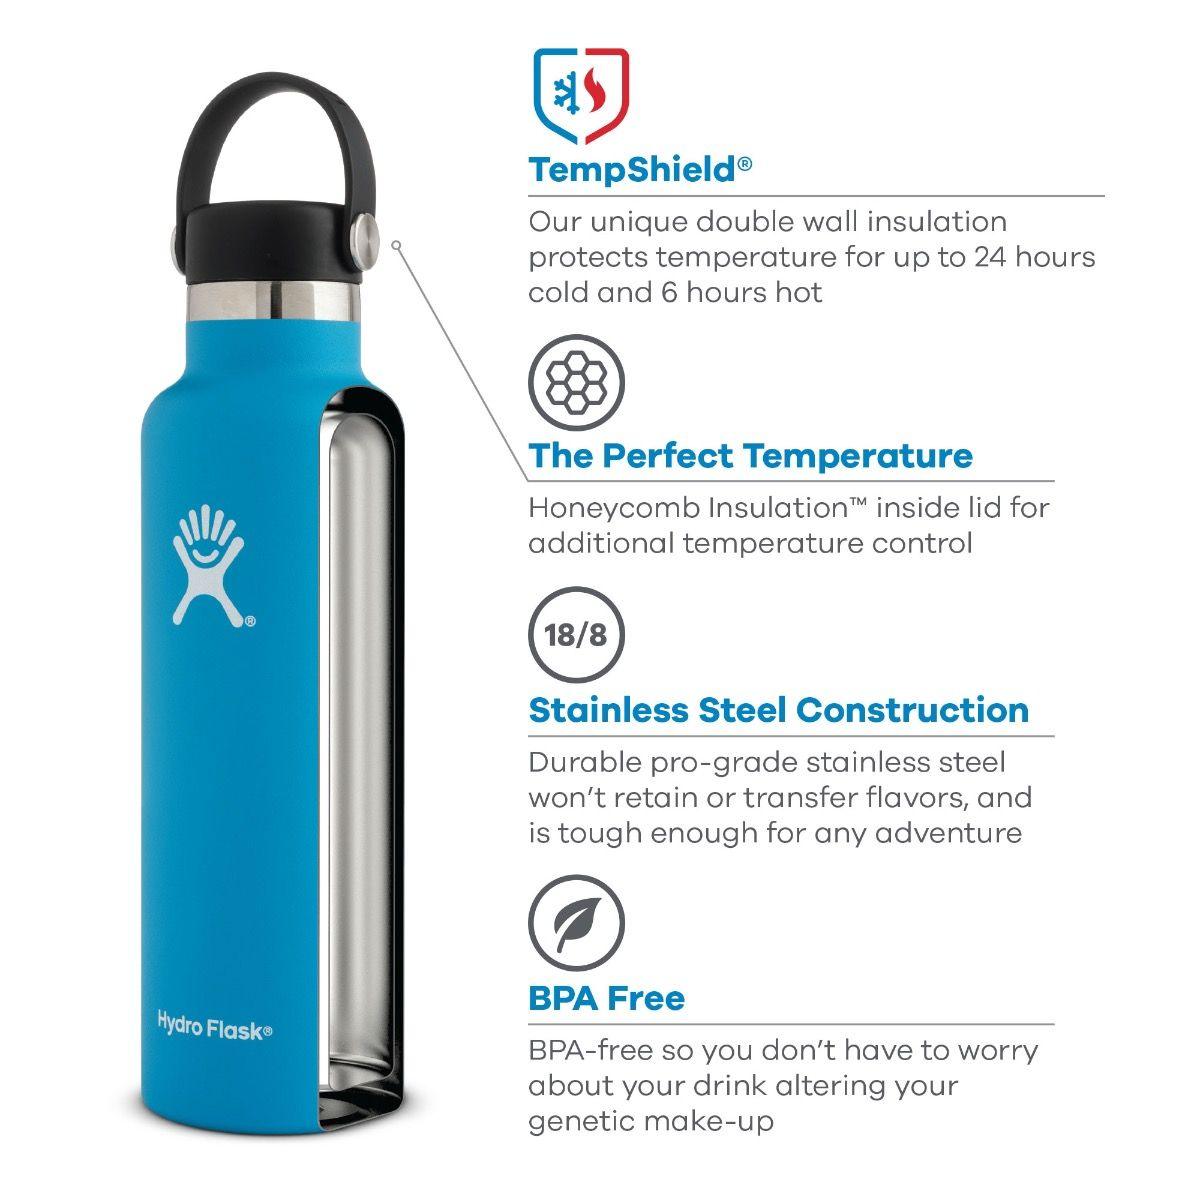 Hydro Flask Standard Mouth Bottle w/ Flex Cap - 21 Oz